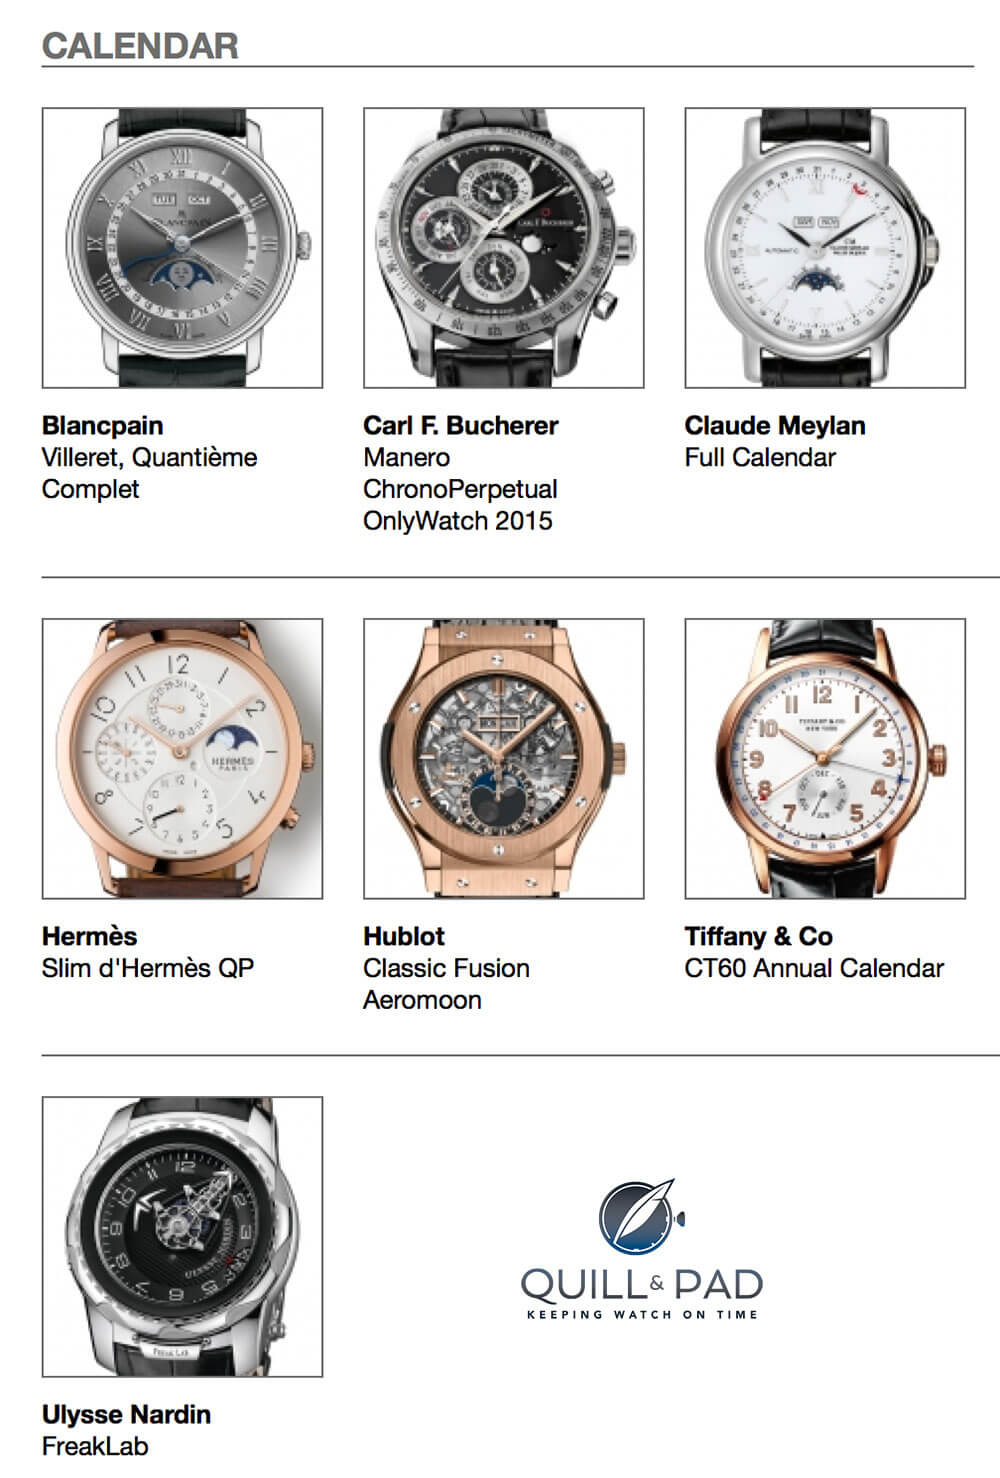 Calendar watches entered in the 2015 Grand Prix d’Horlogerie de Genève